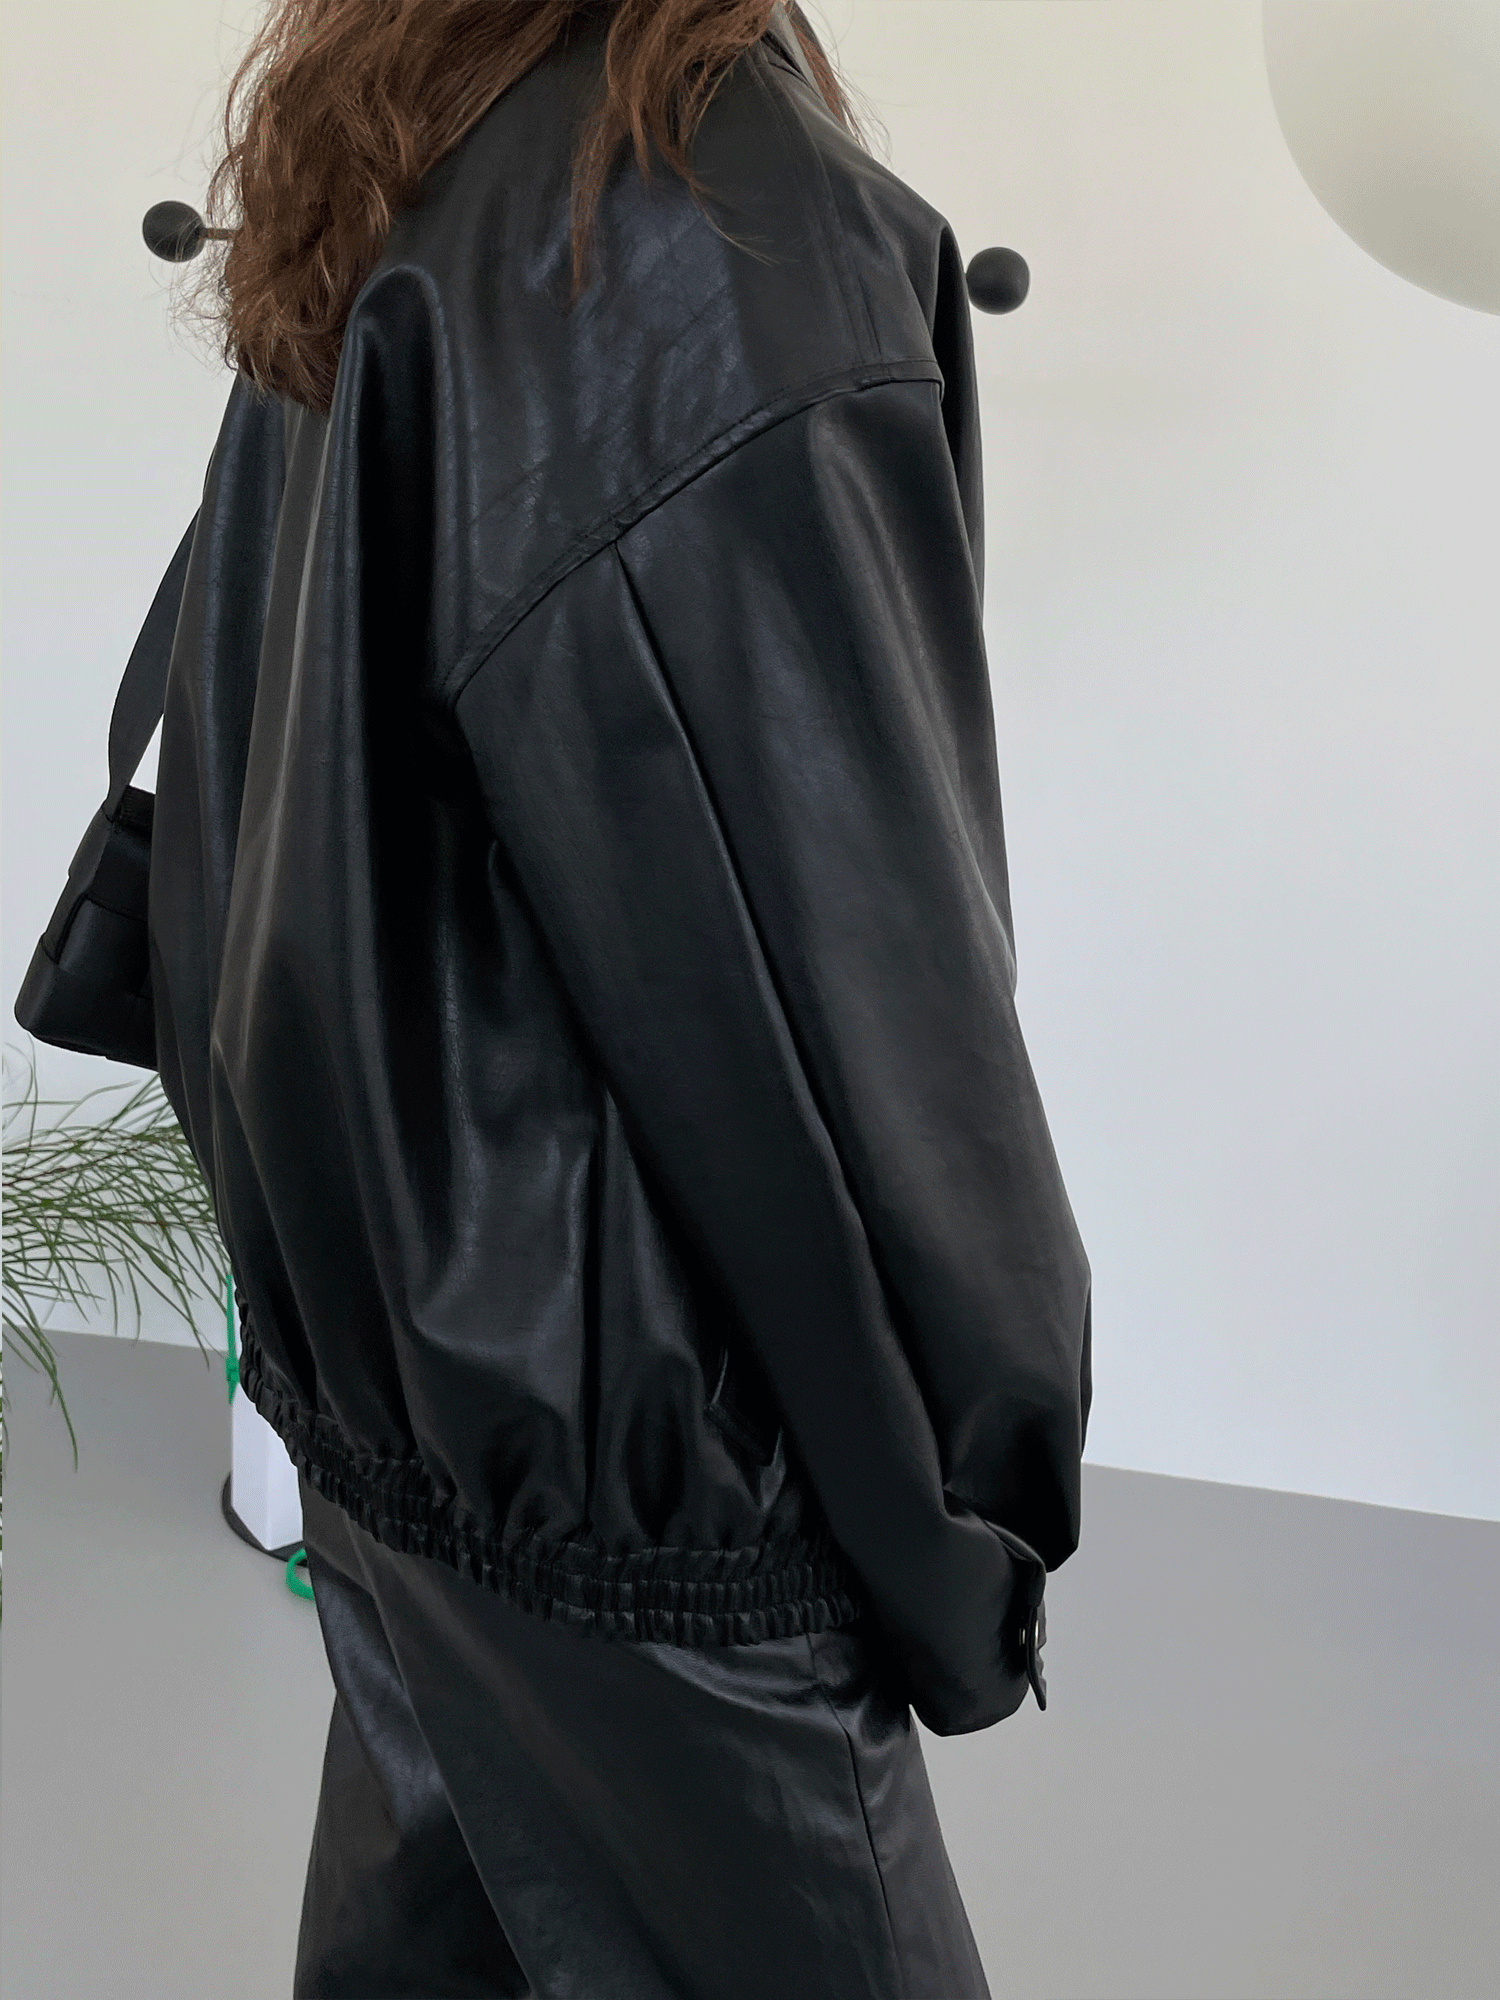 leather blouson(black)